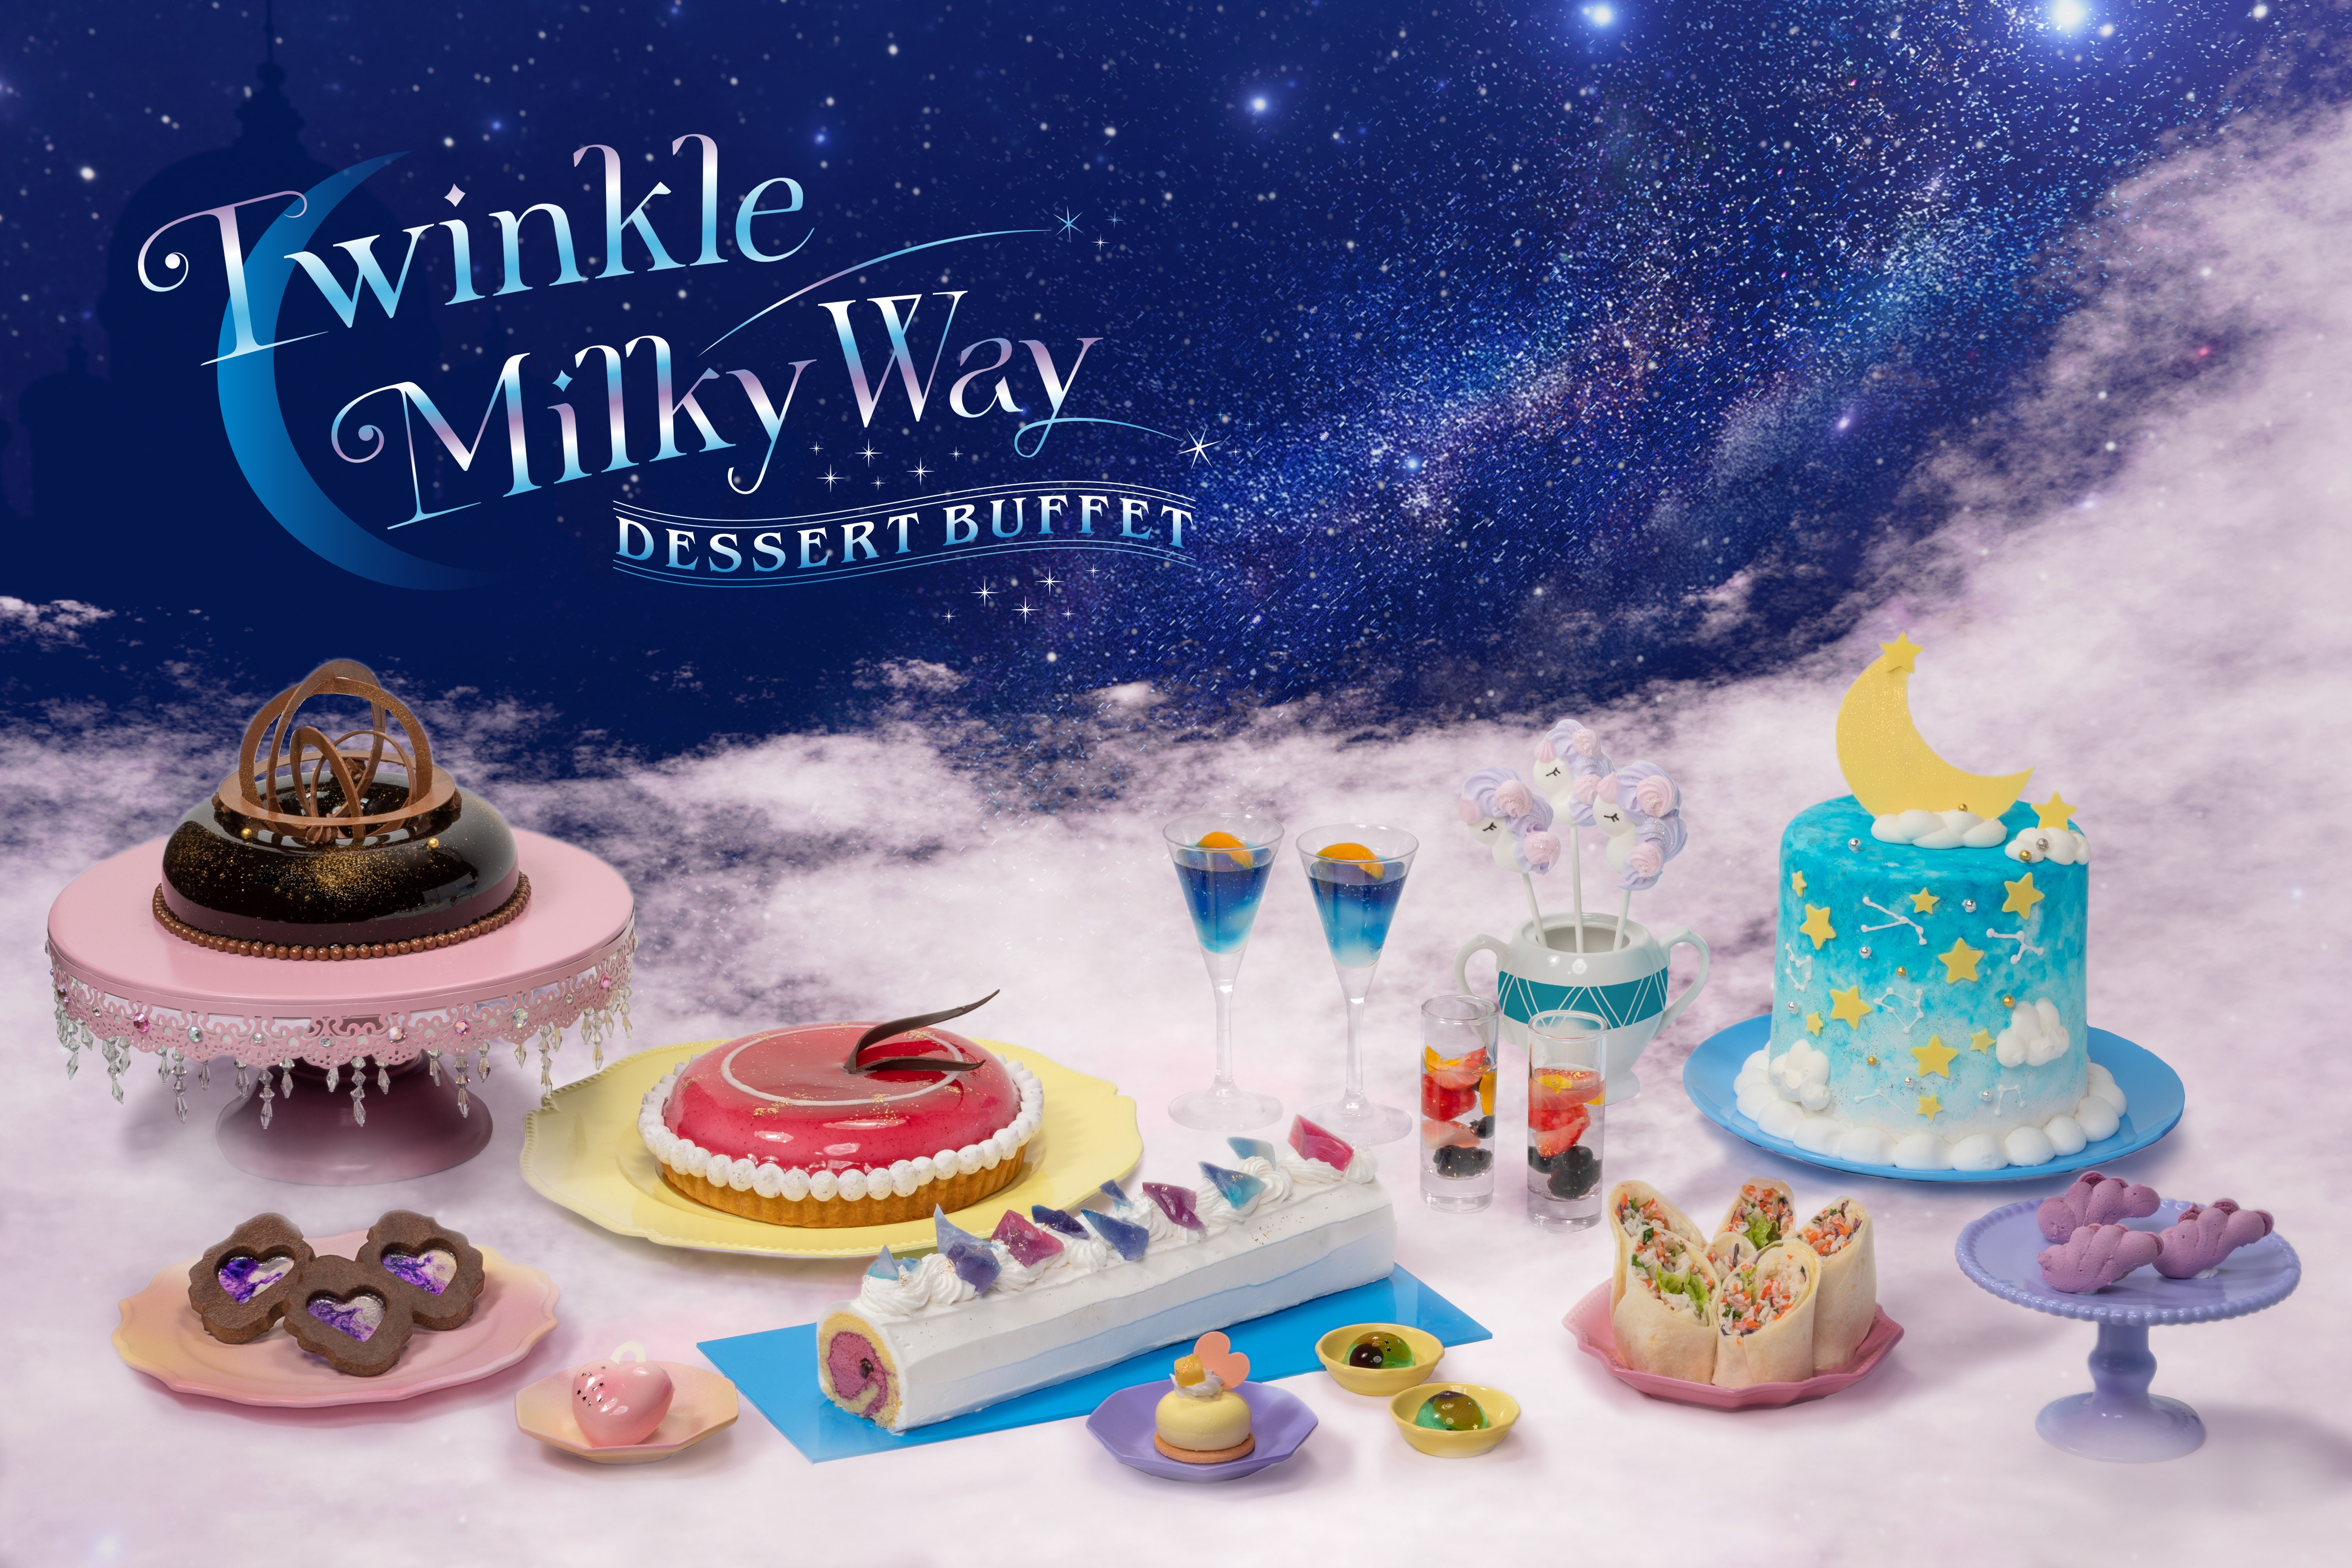 Twinkle Milky Way Dessert Buffet held at Hilton Tokyo Bay!